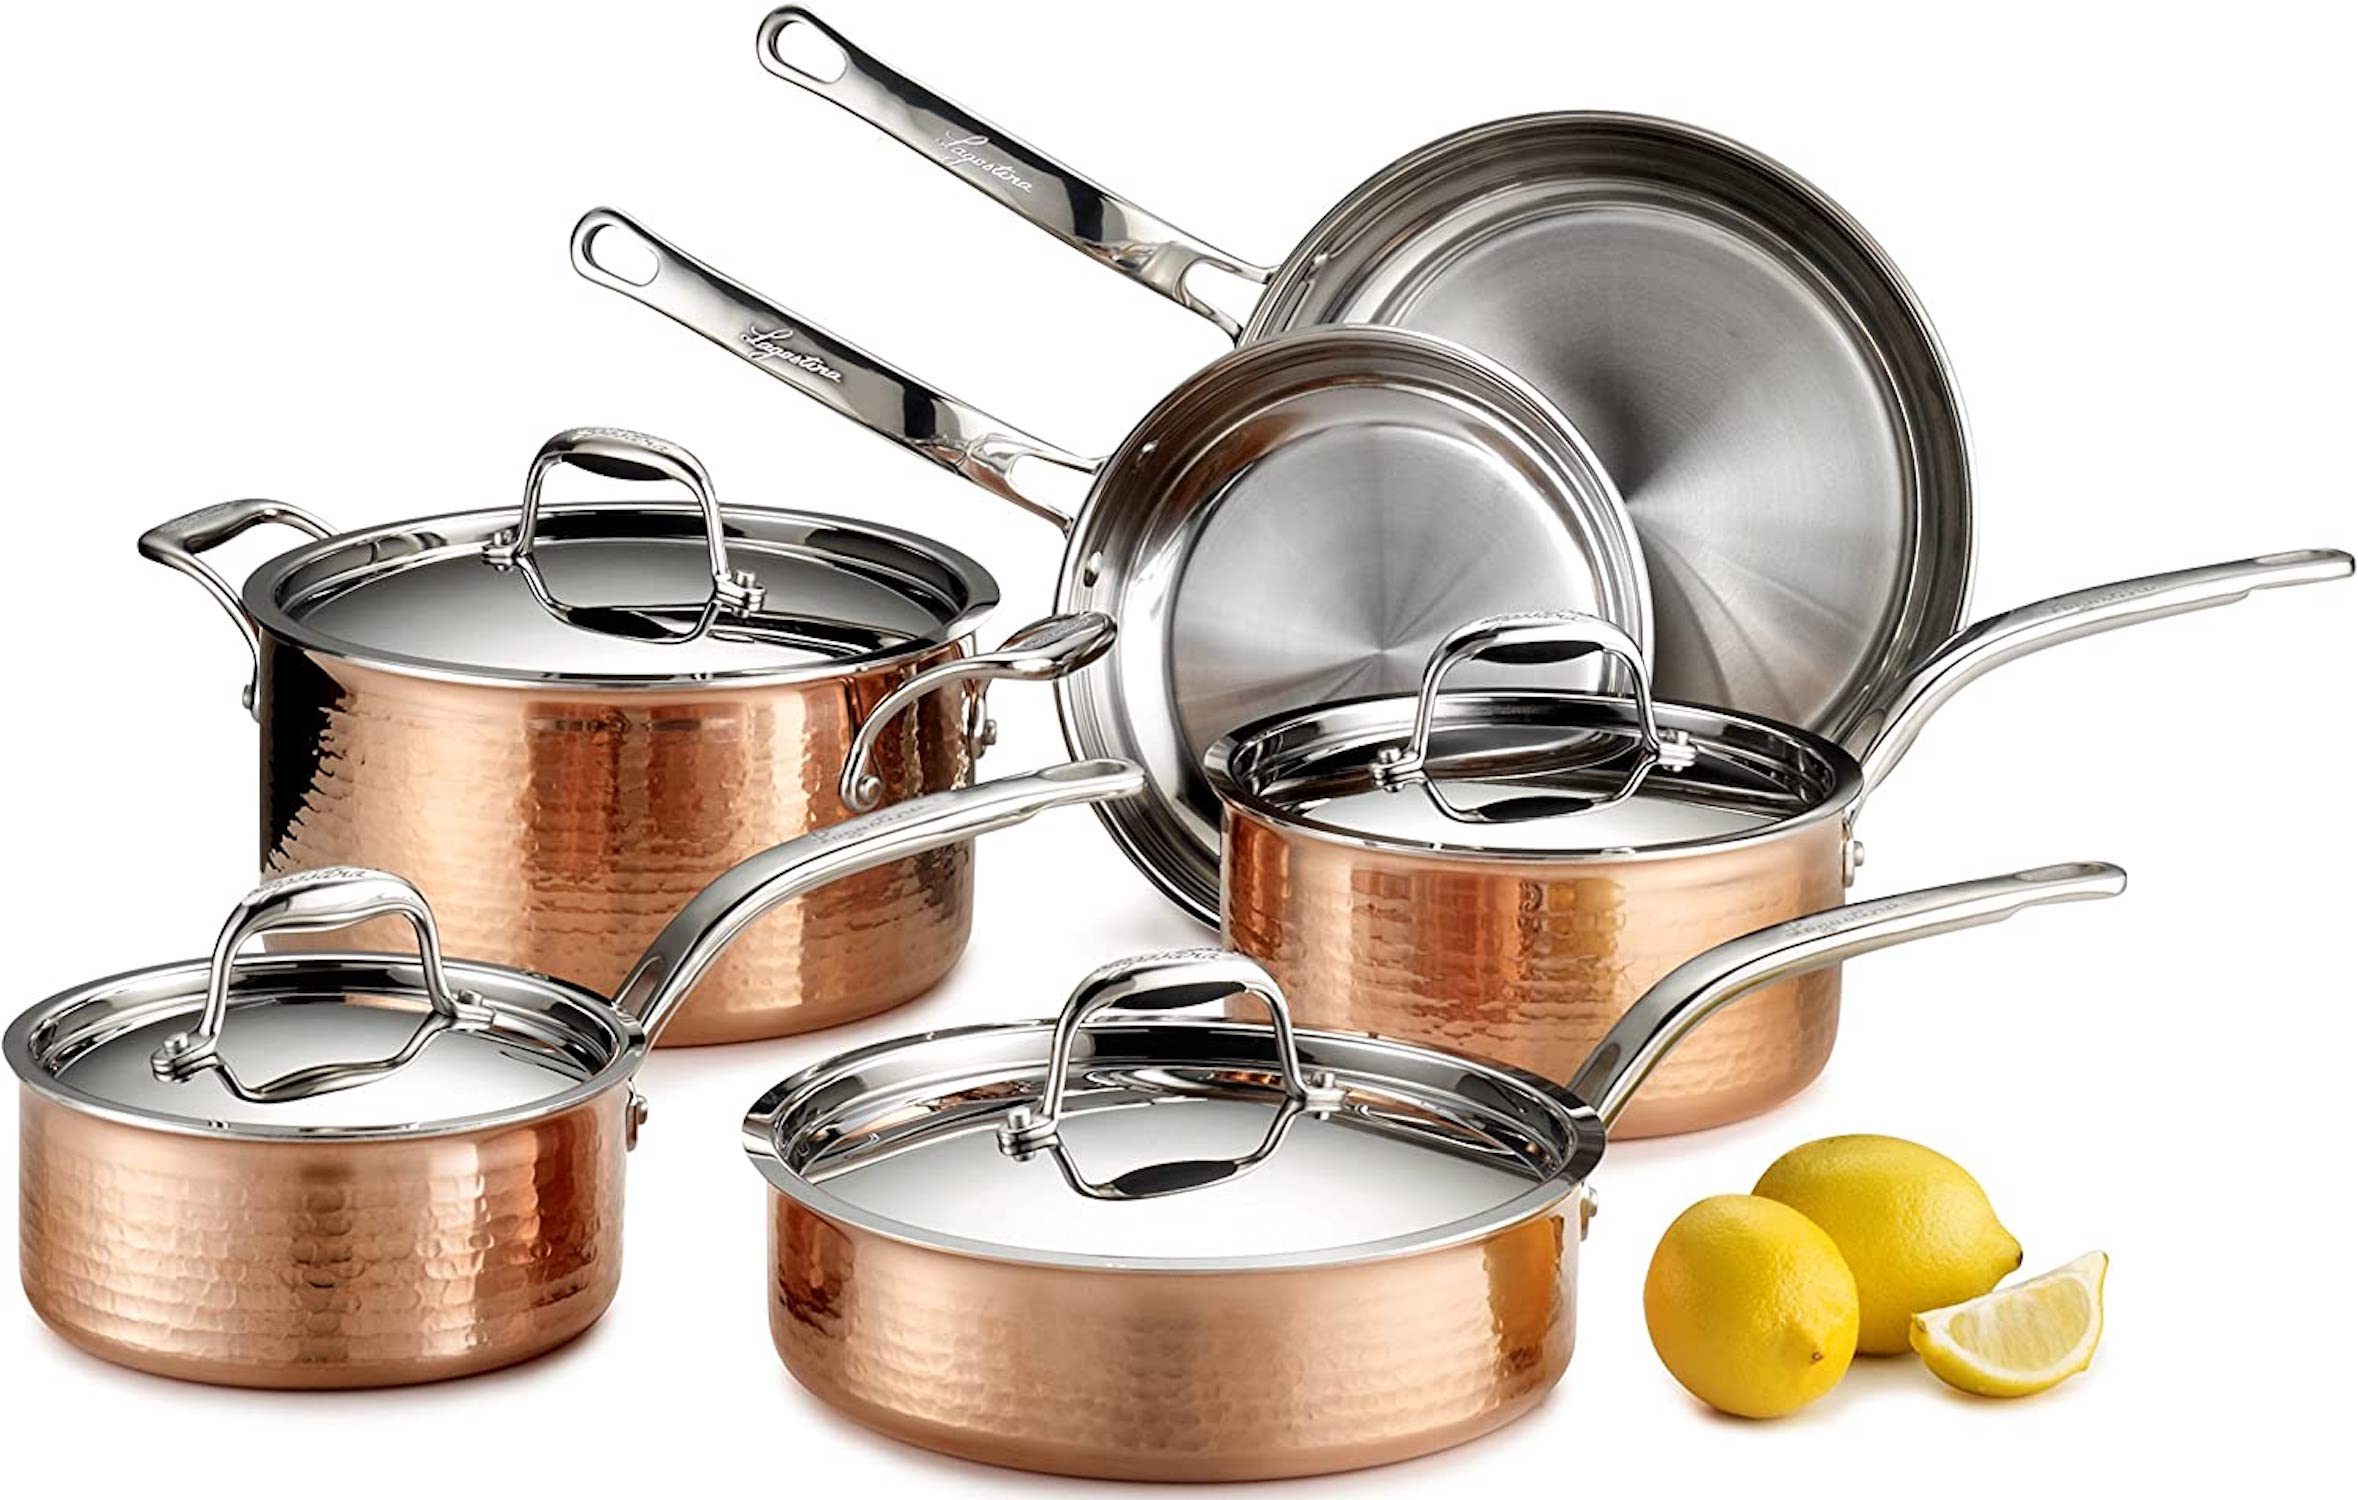 https://cdn.bestreviews.com/images/v4desktop/product-matrix/best-copper-cookware-sets-lagostina-martellata-hammered-copper-cookware-set-2.jpg